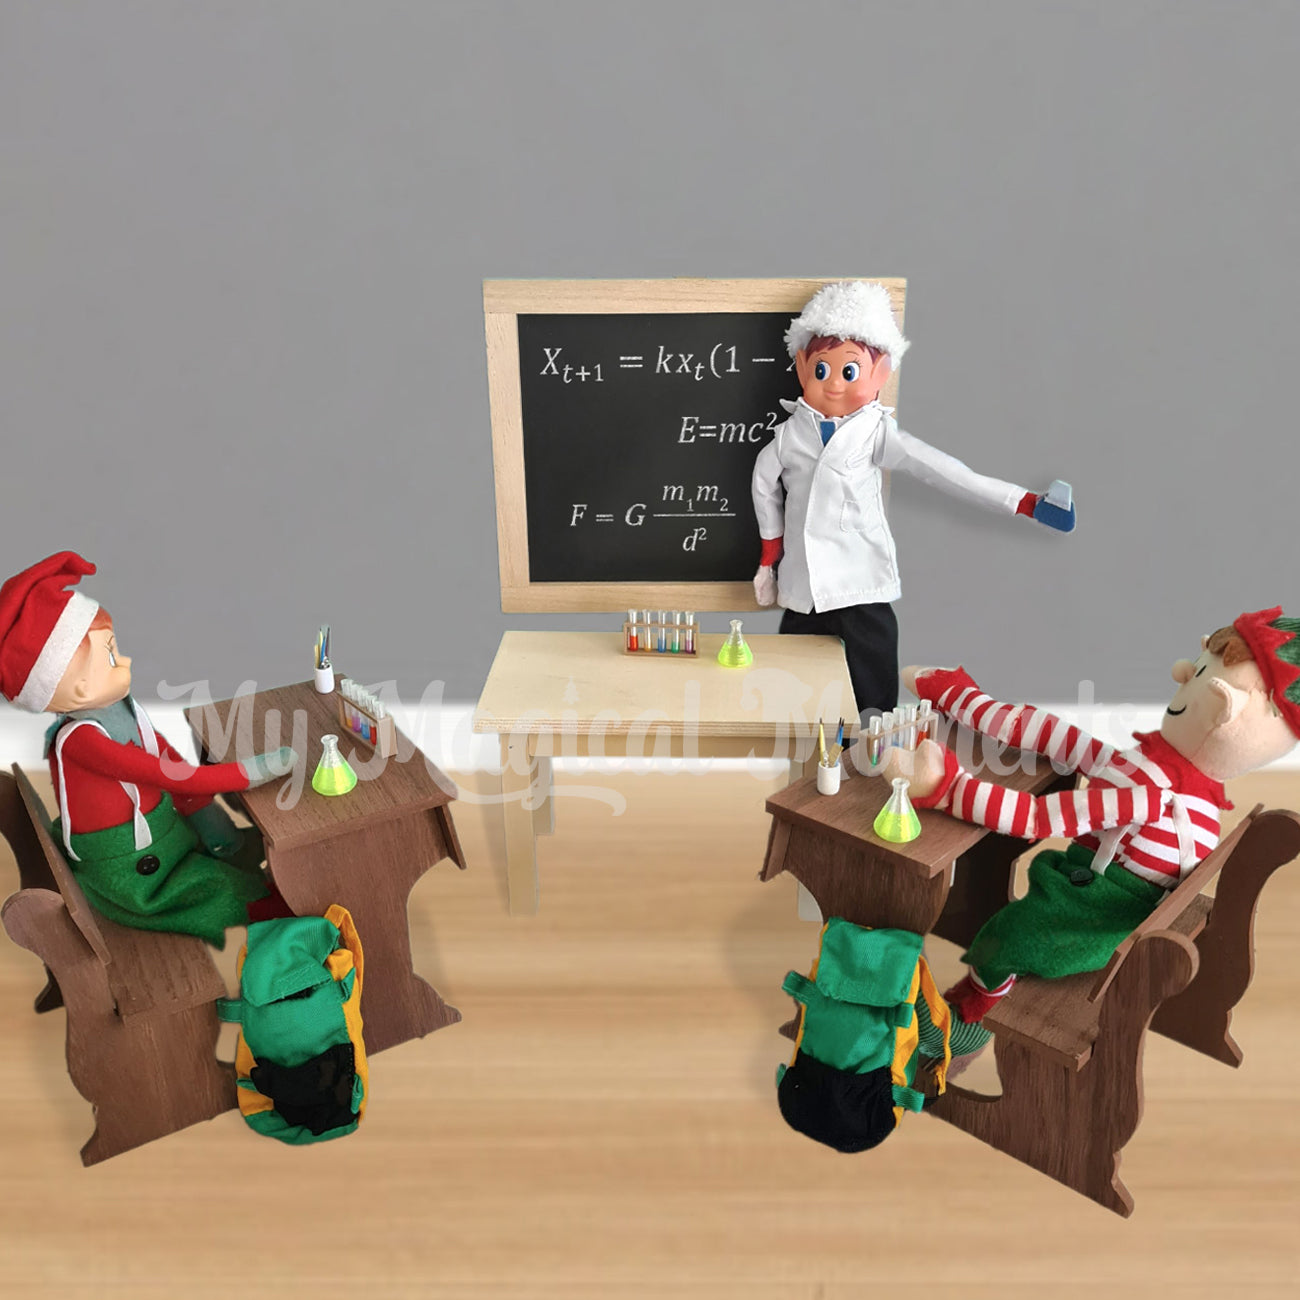 Elf School with a miniature chalkboard, science teacher, chemistry set, school desks and backpacks